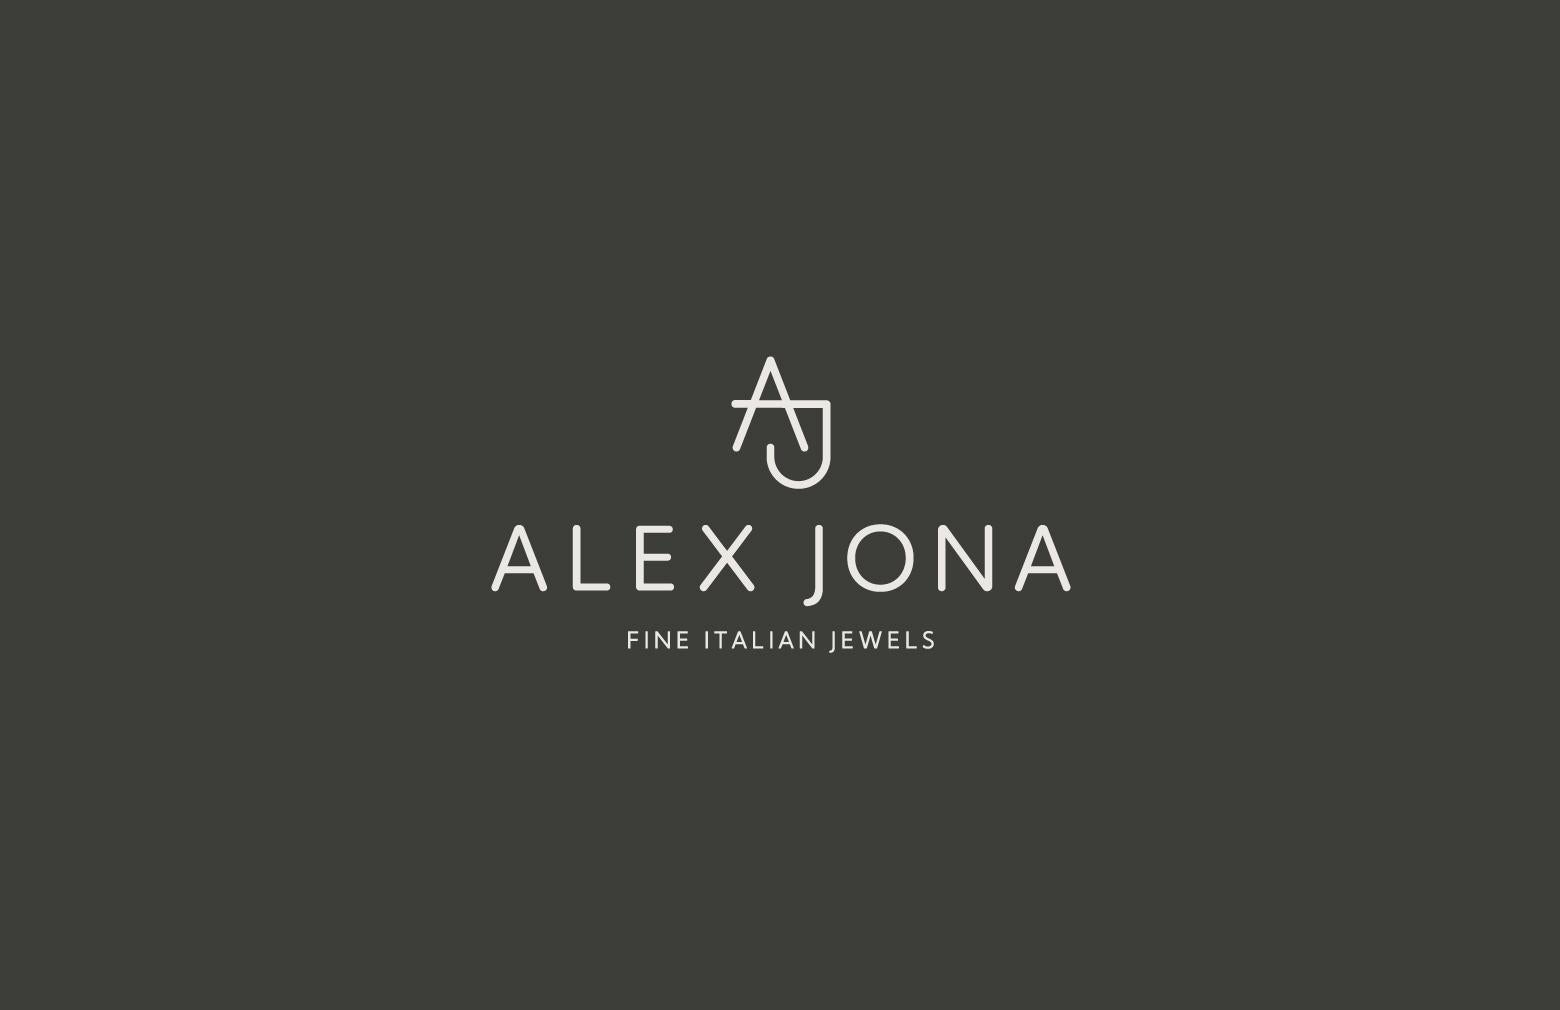 Alex Jona Gold-Plated Sterling Silver Cage Bangle Bracelet For Sale 5